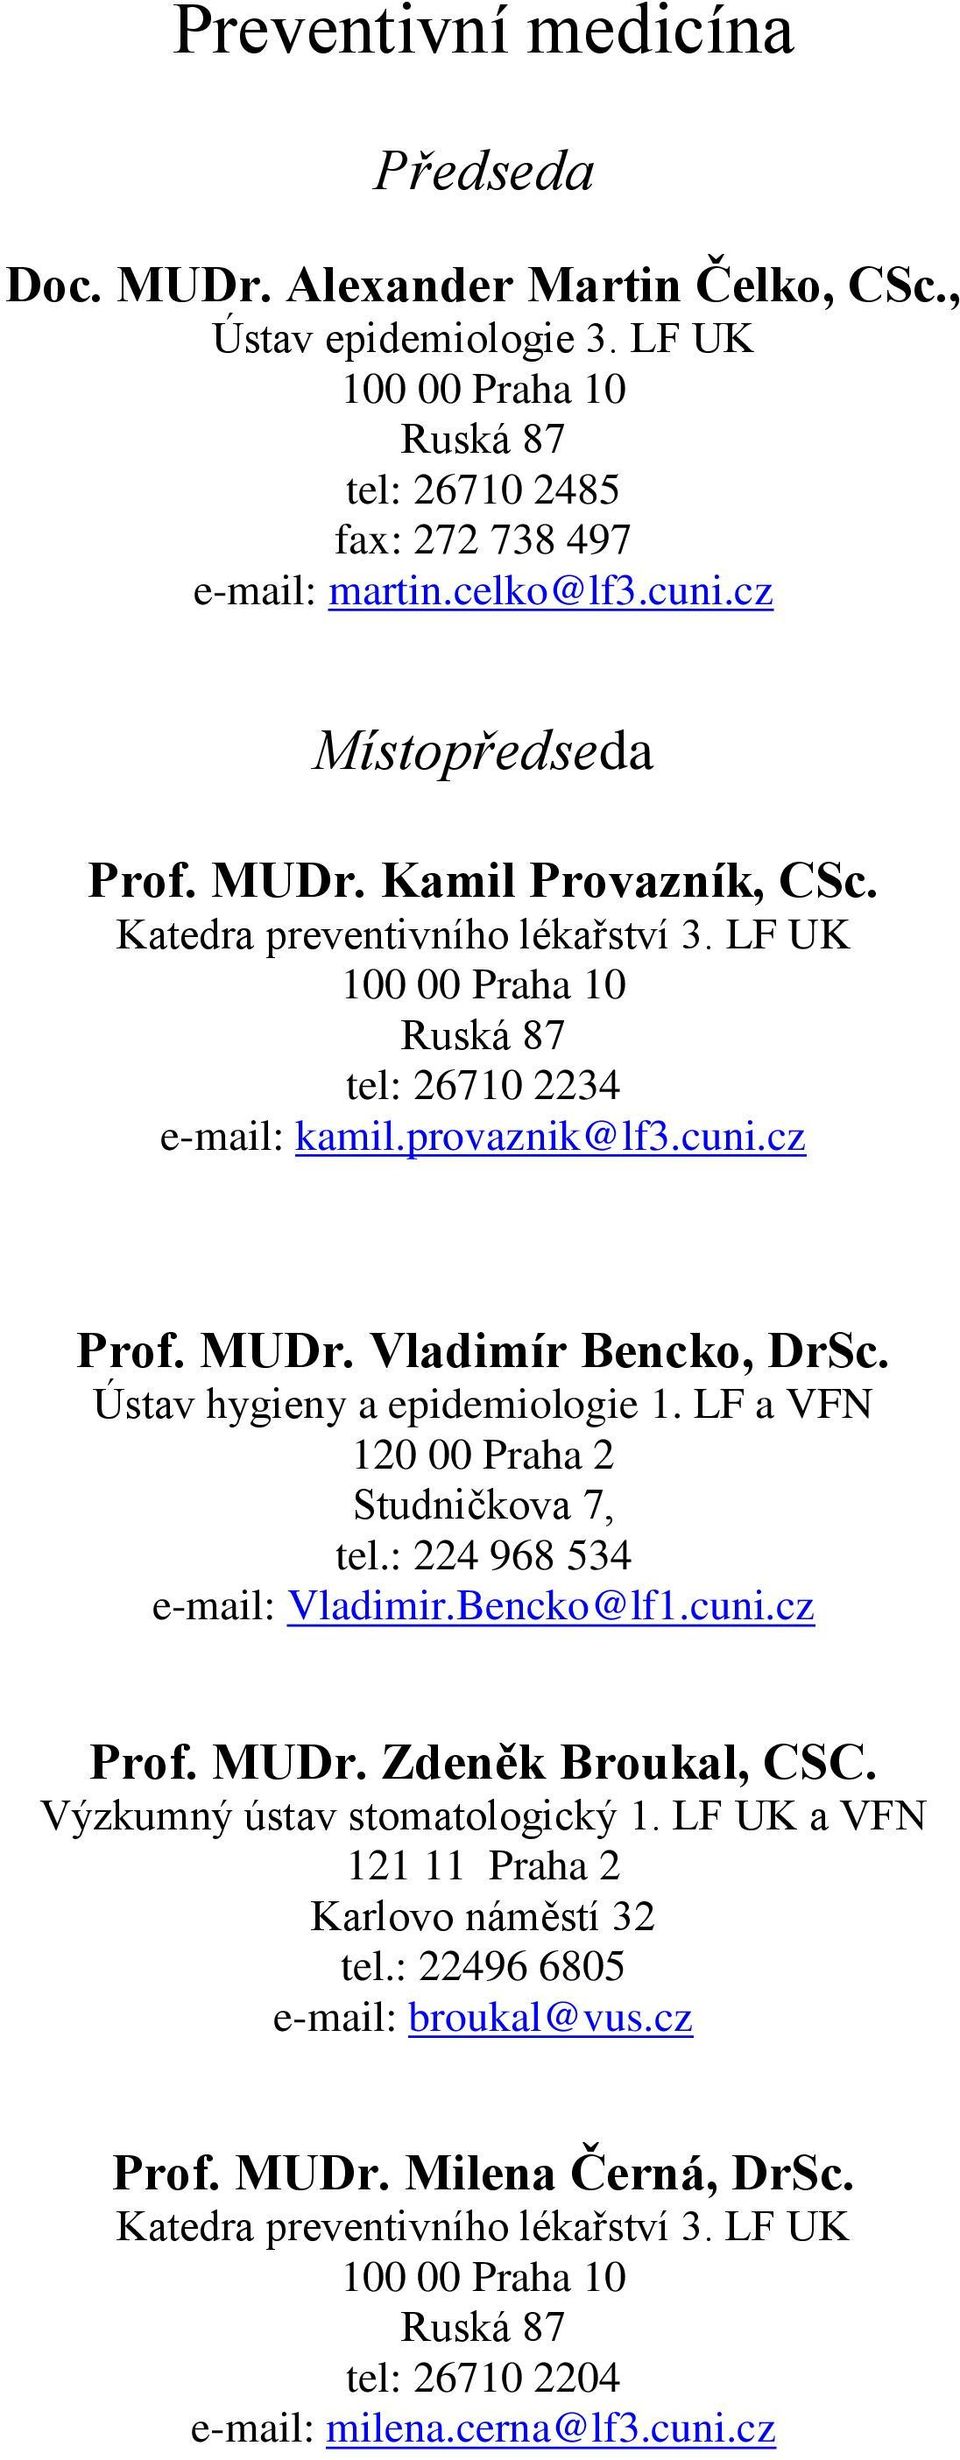 Ústav hygieny a epidemiologie LF a VFN 120 00 Praha 2 Studničkova 7, tel.: 224 968 534 e-mail: Vladimir.Bencko@lfcuni.cz Prof. MUDr. Zdeněk Broukal, CSC.